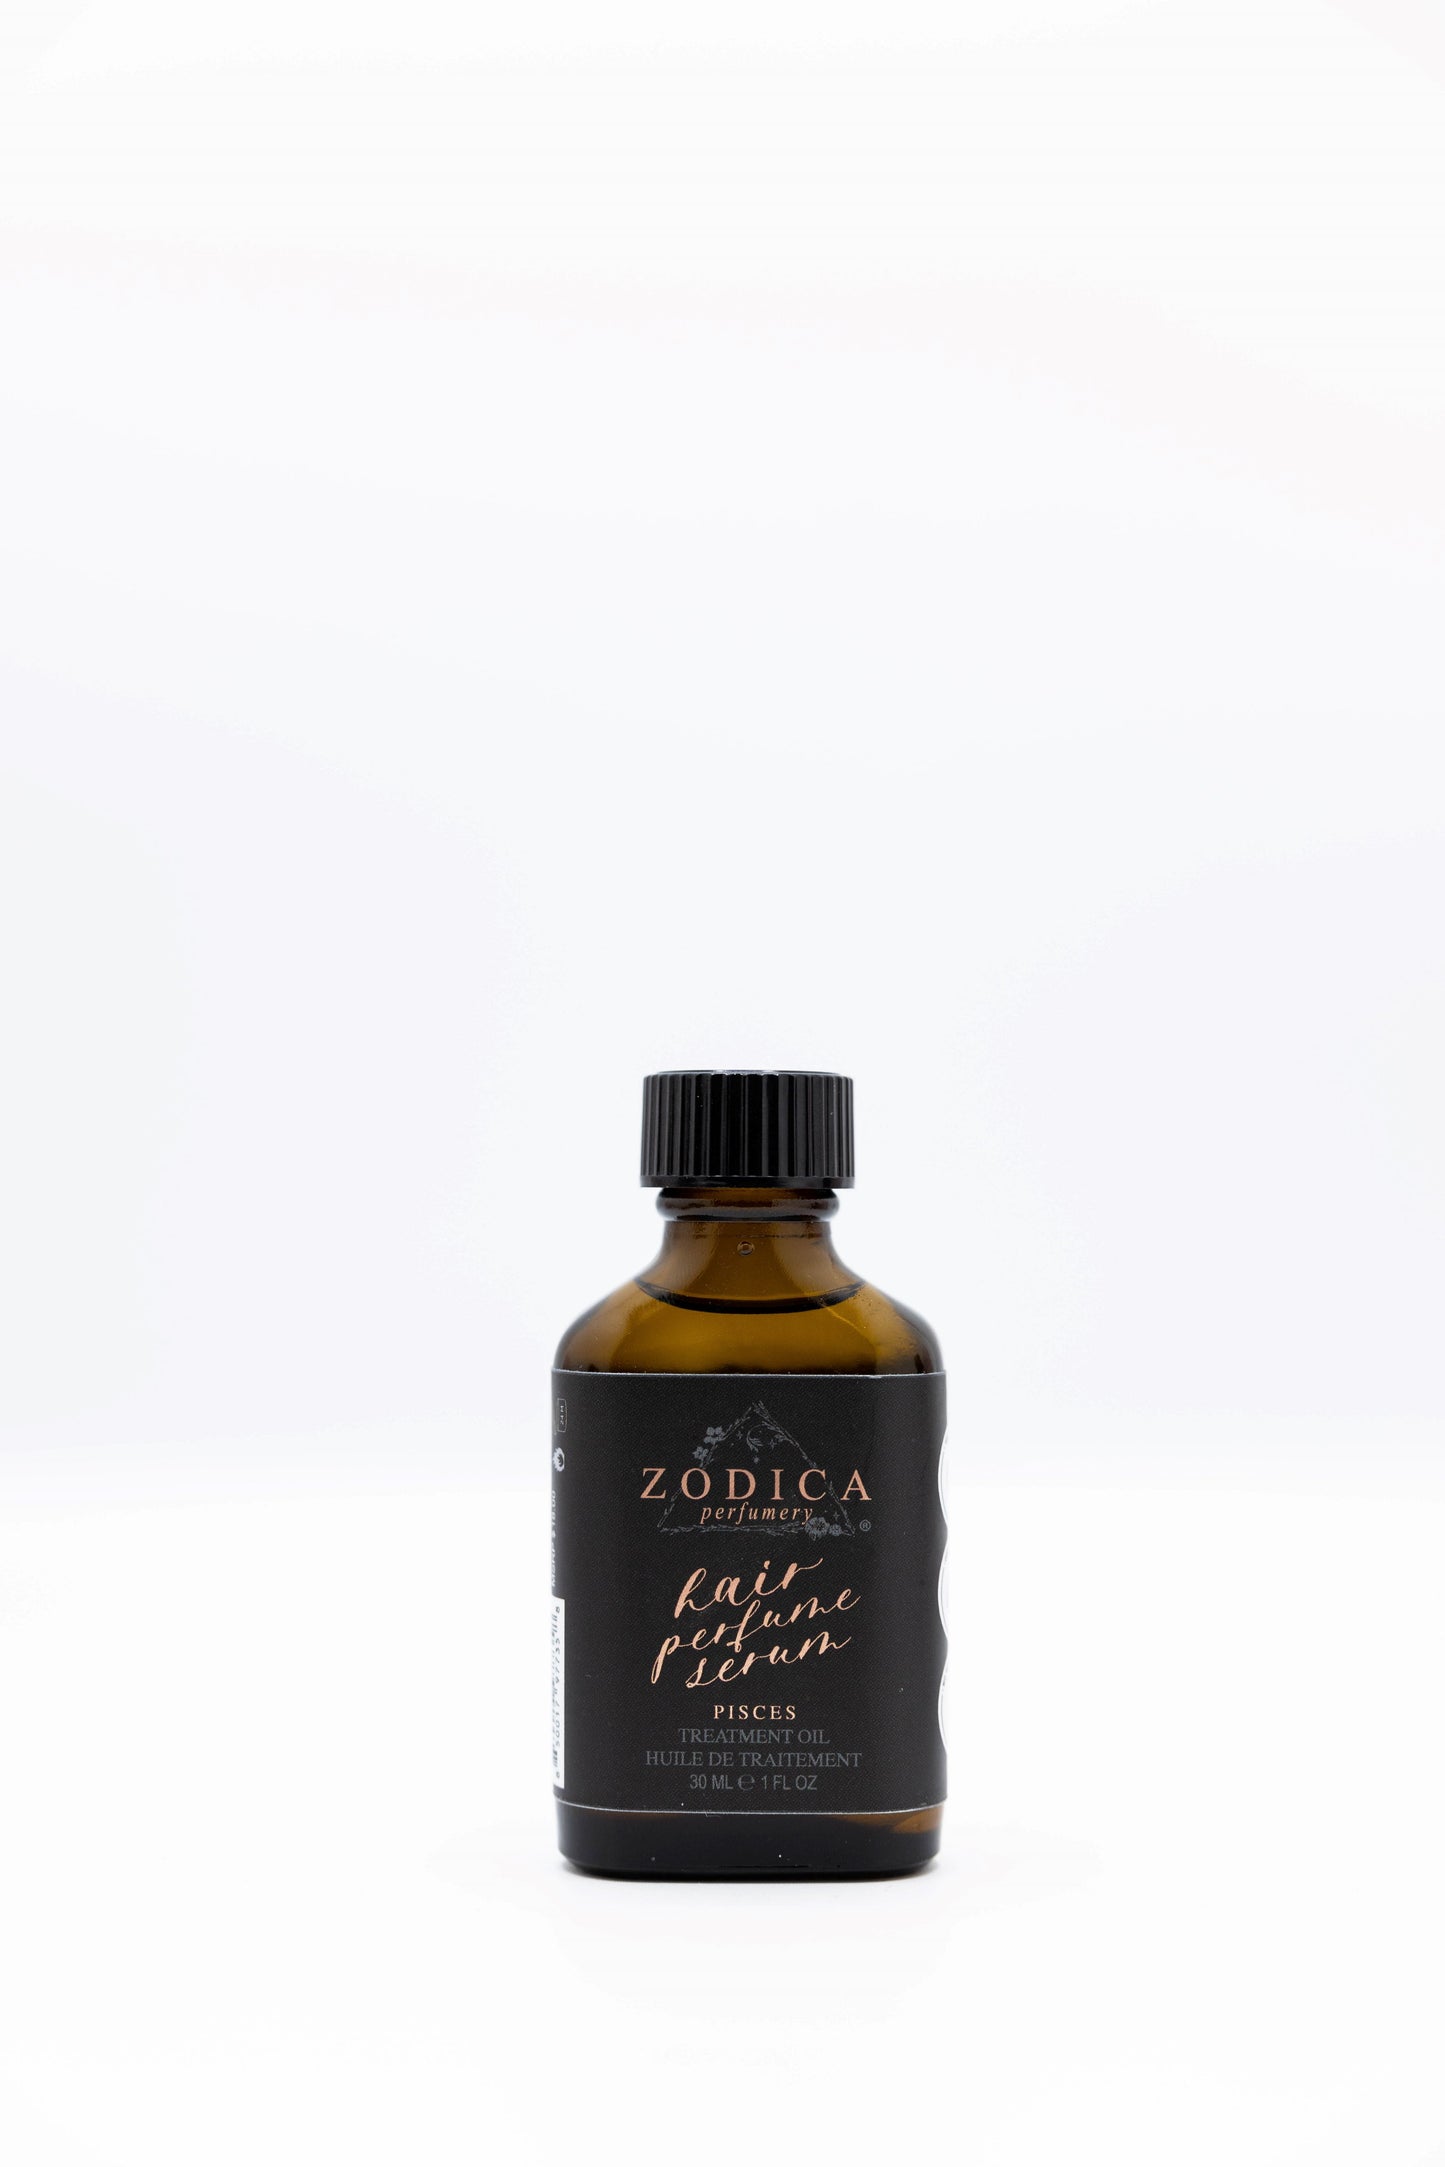 Zodica Hair Oil Pisces